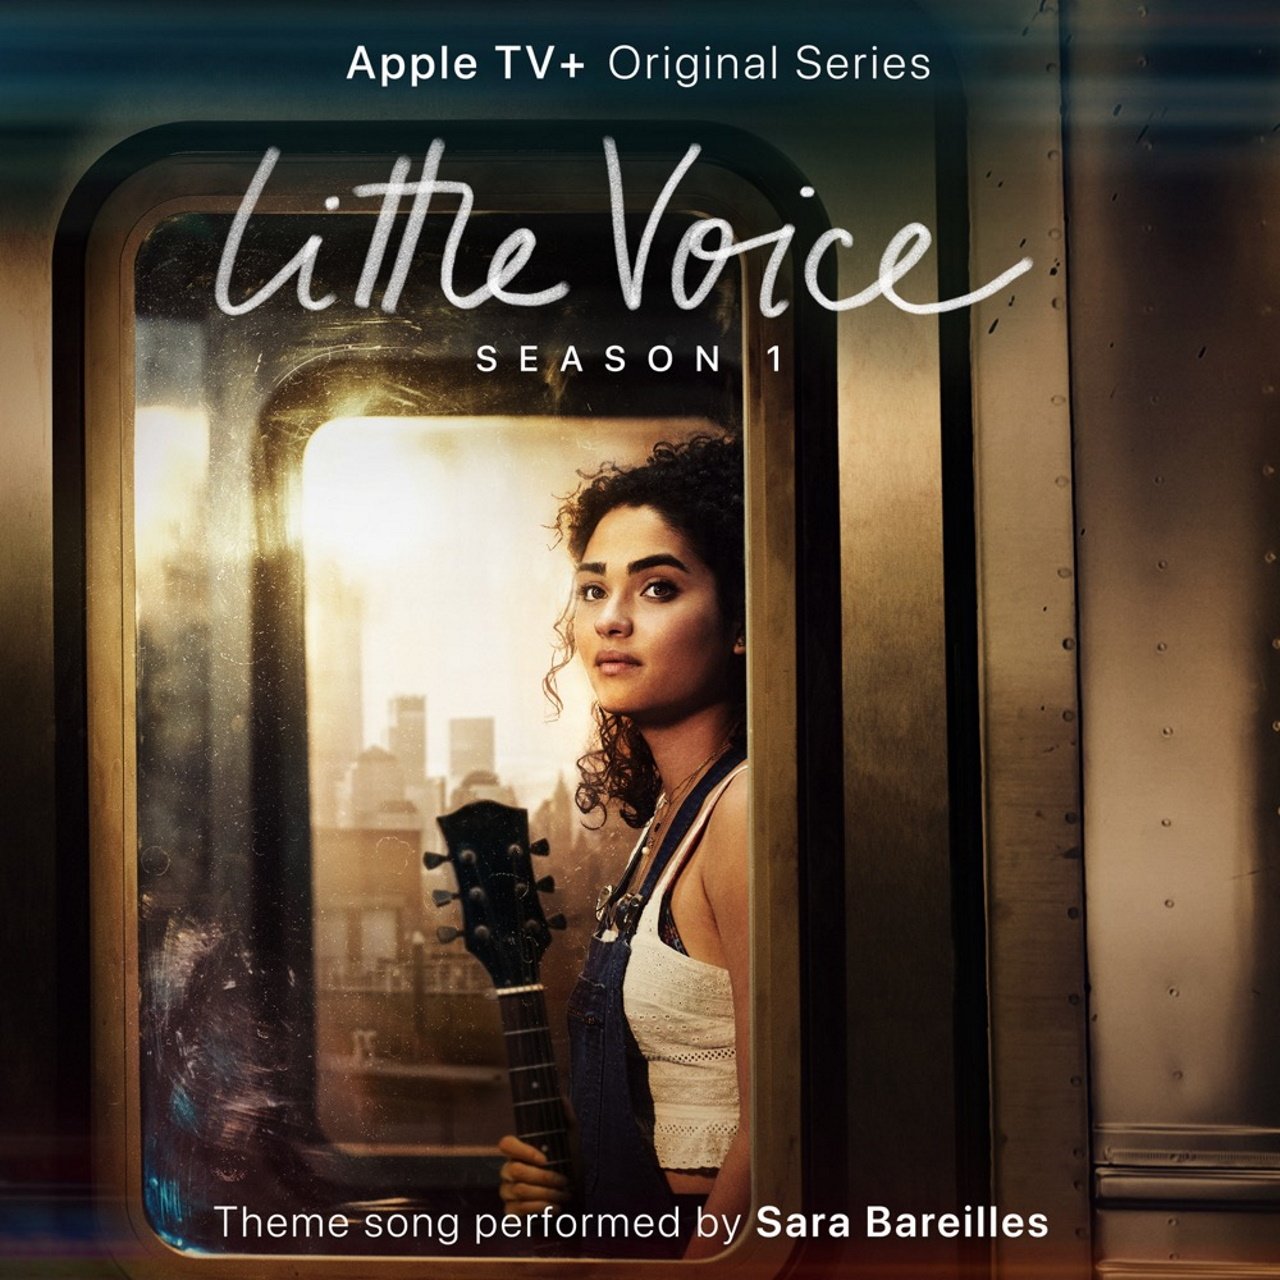 Little Voice Poster